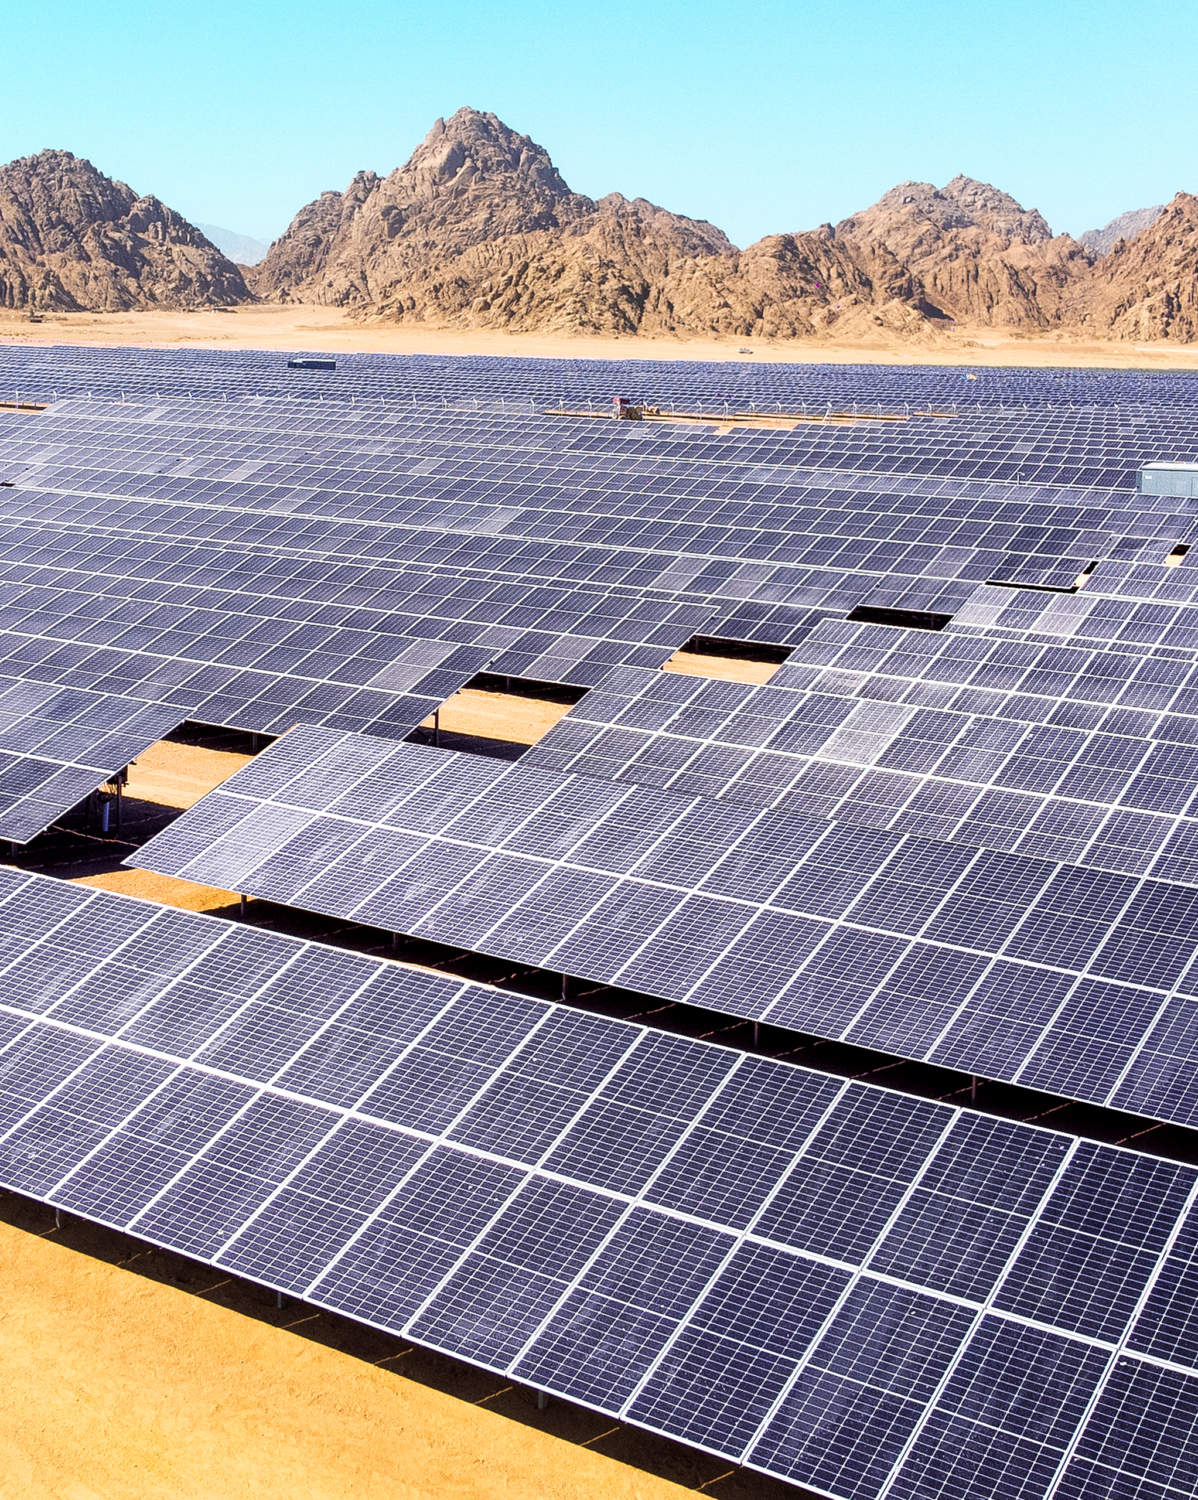 Sharm ElSheikh solar Power plants